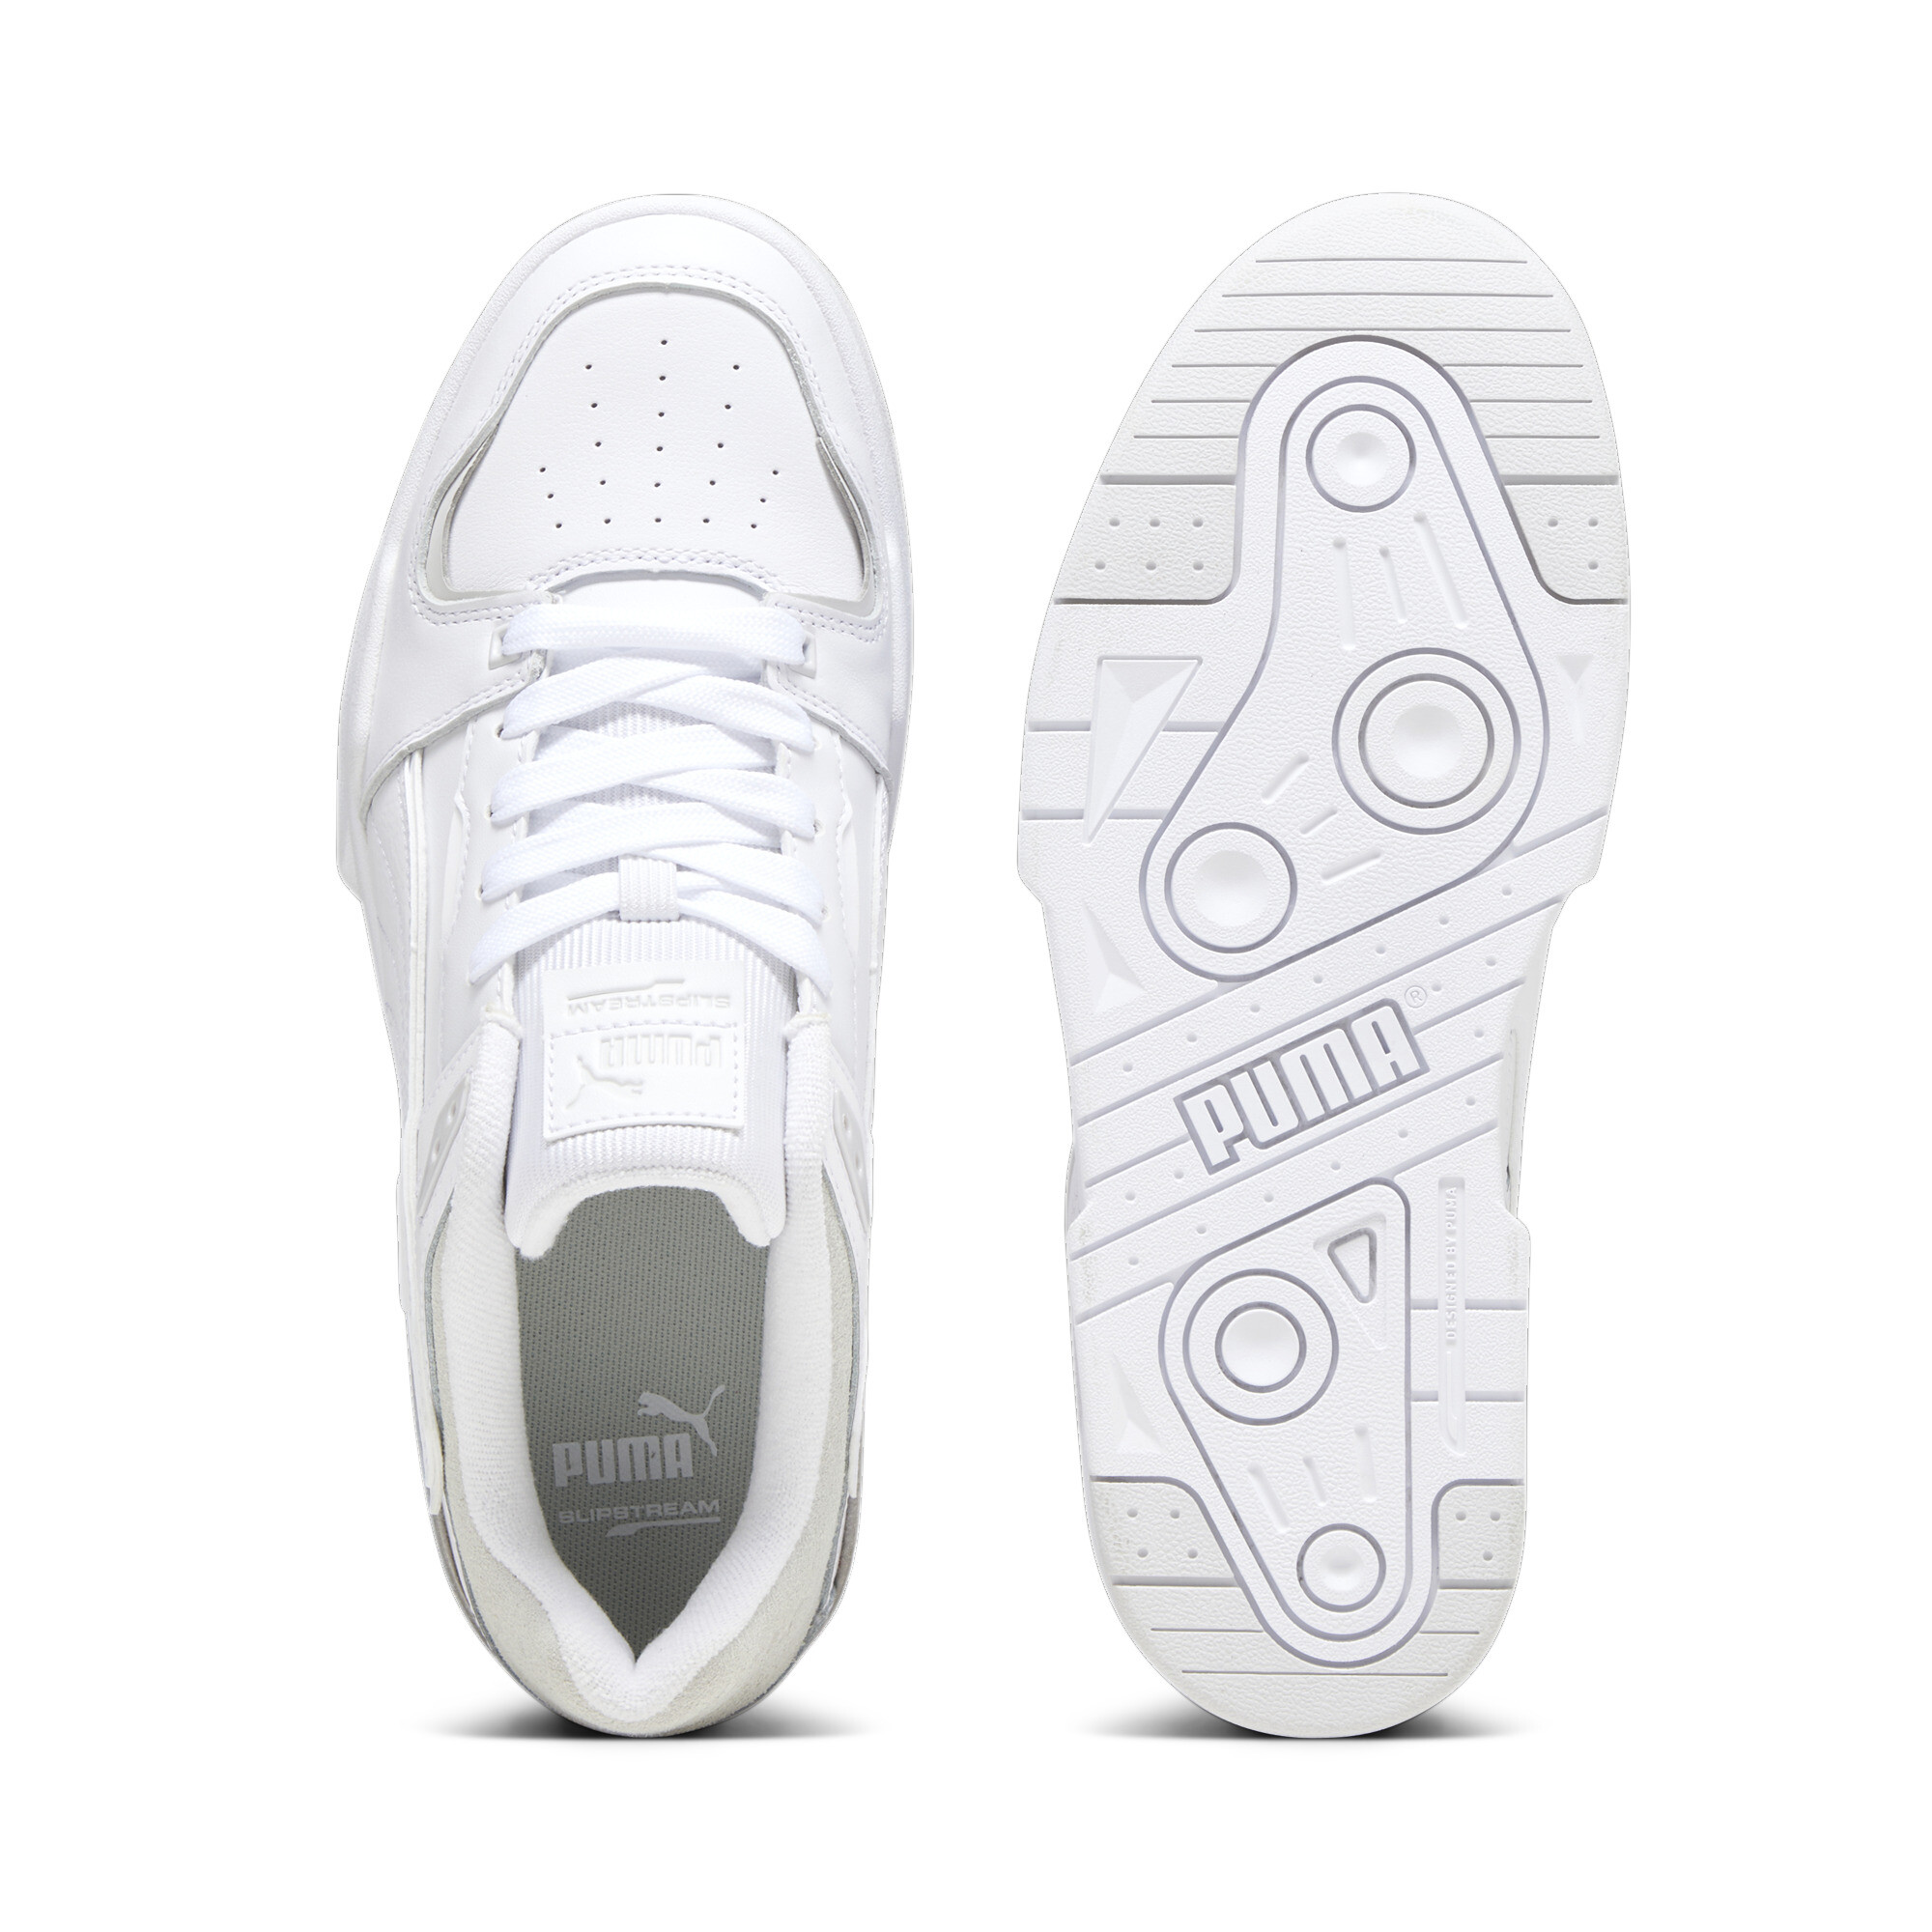 Men's PUMA Slipstream Bball Sneakers In White, Size EU 37